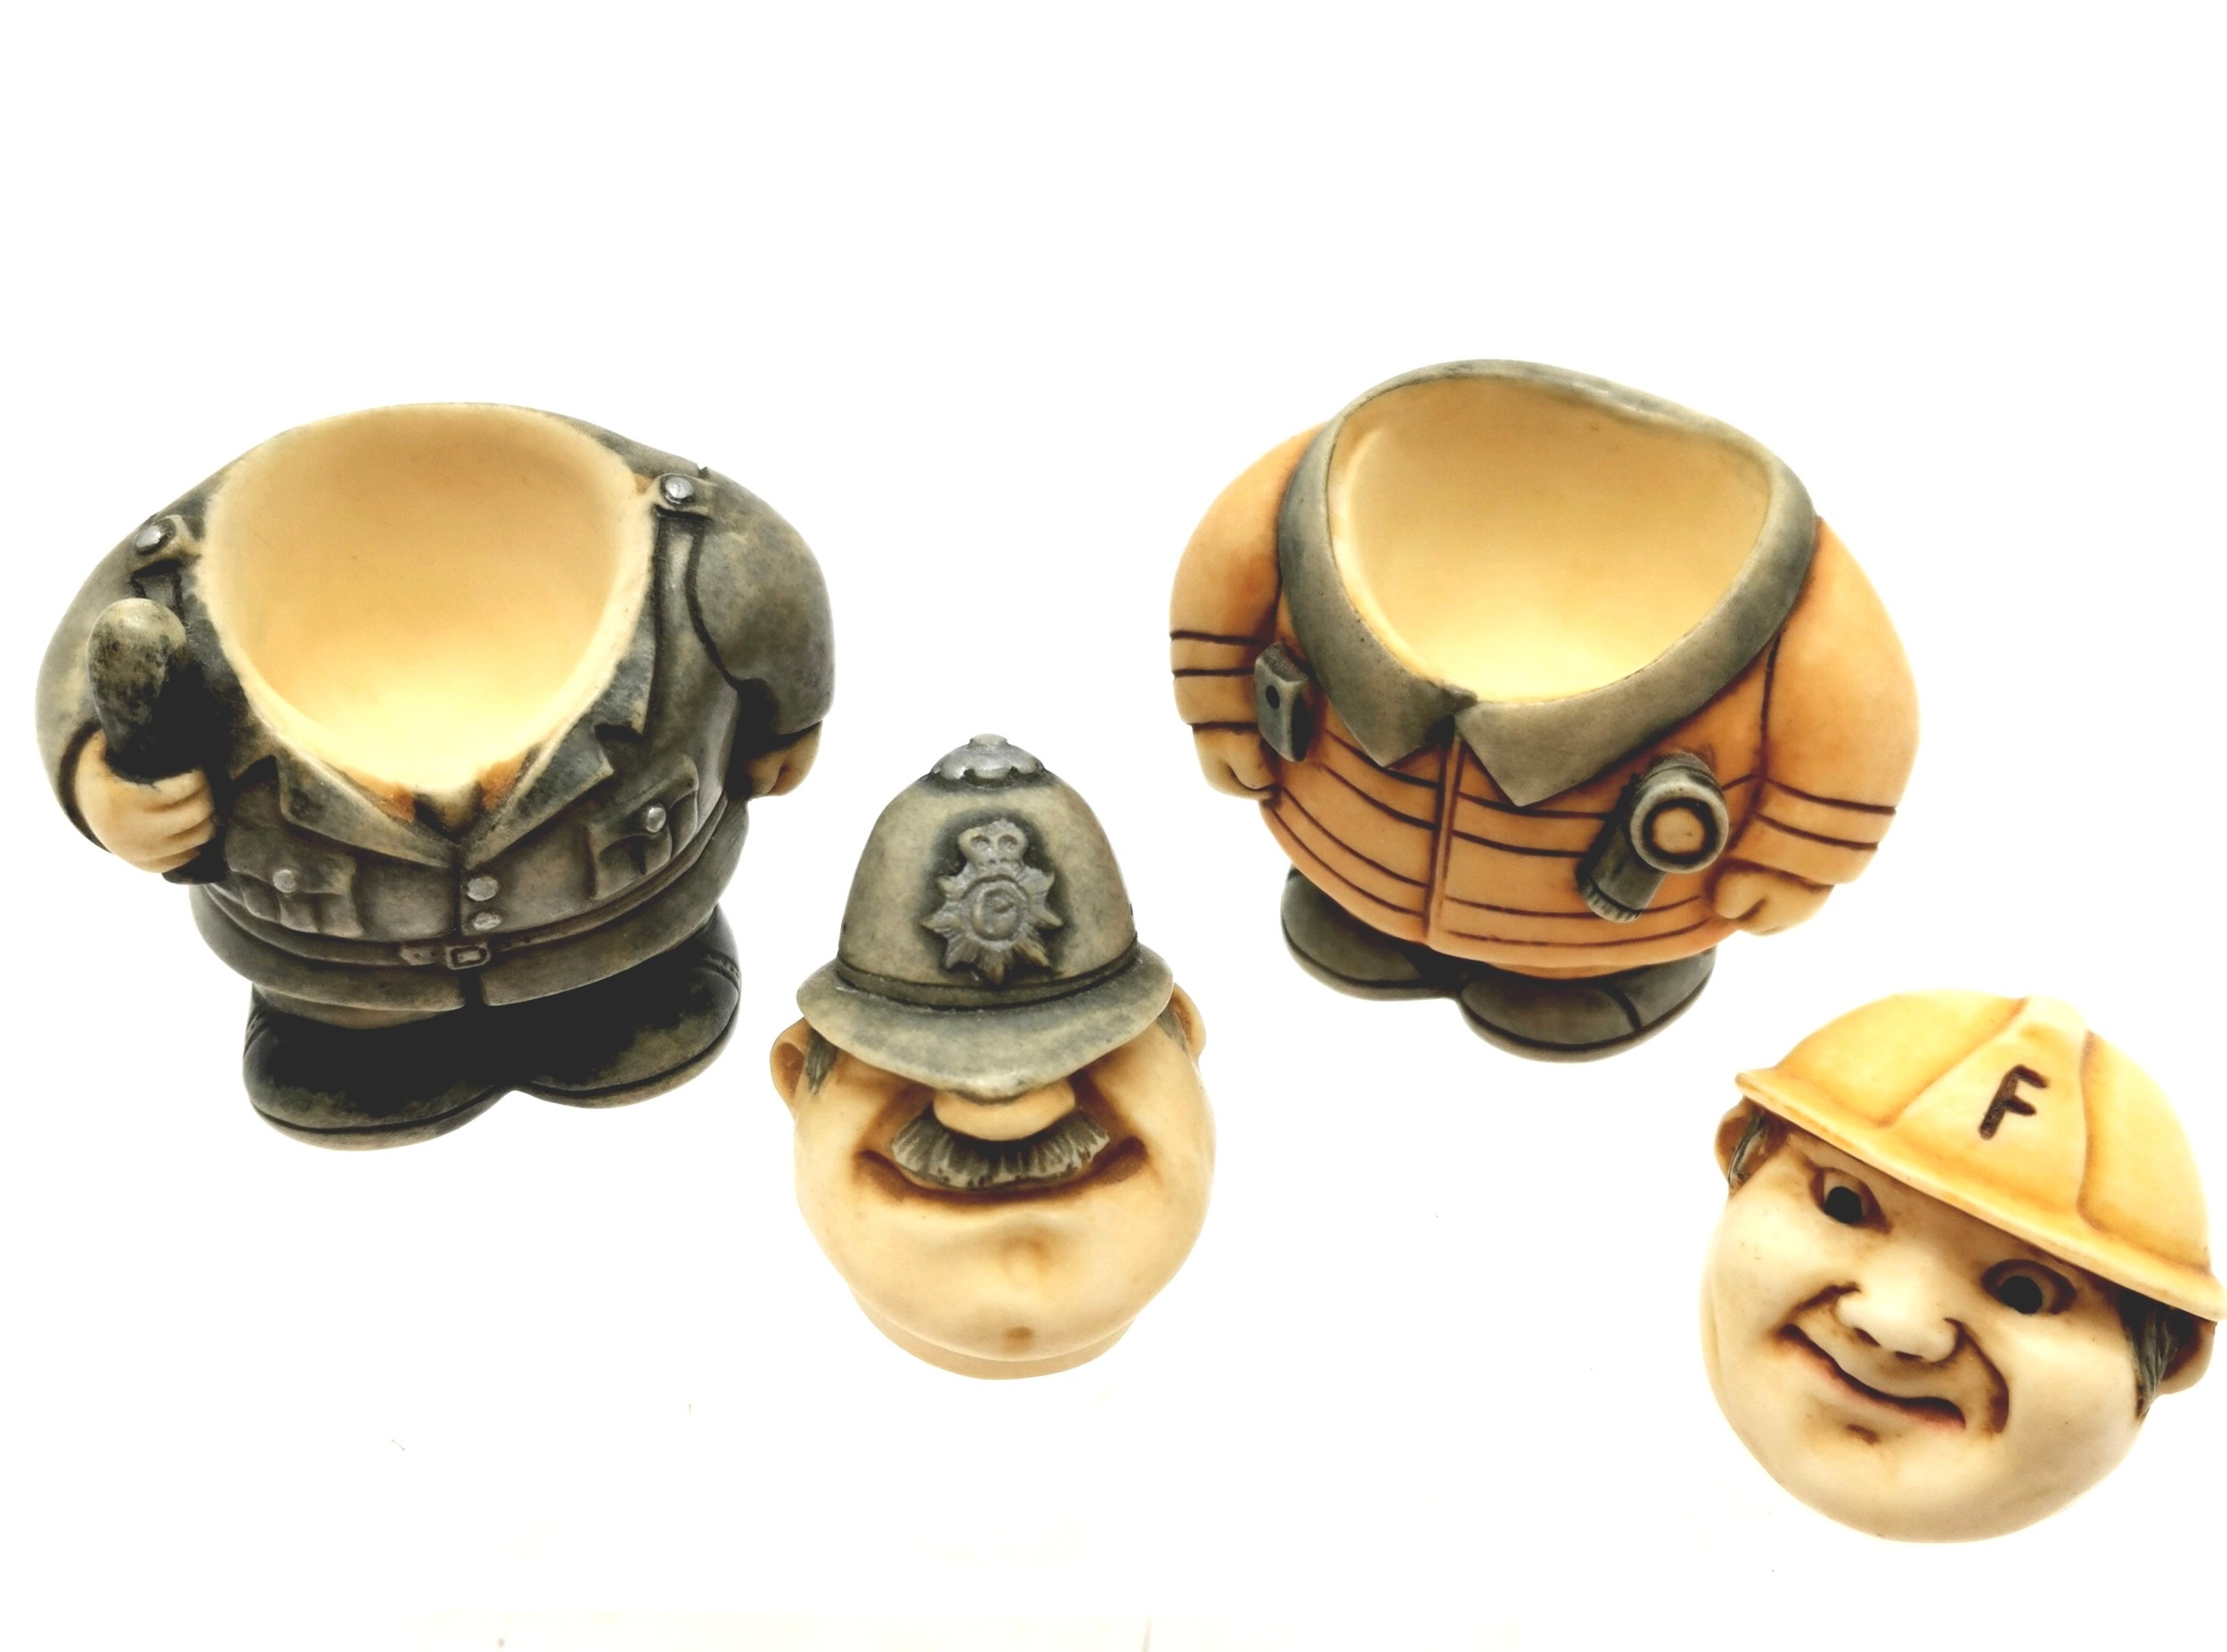 2 x Pot Belly figurines - Whistle blower (policeman) & Smokey Joe (fireman) - approx 5.5cm high - Image 2 of 3